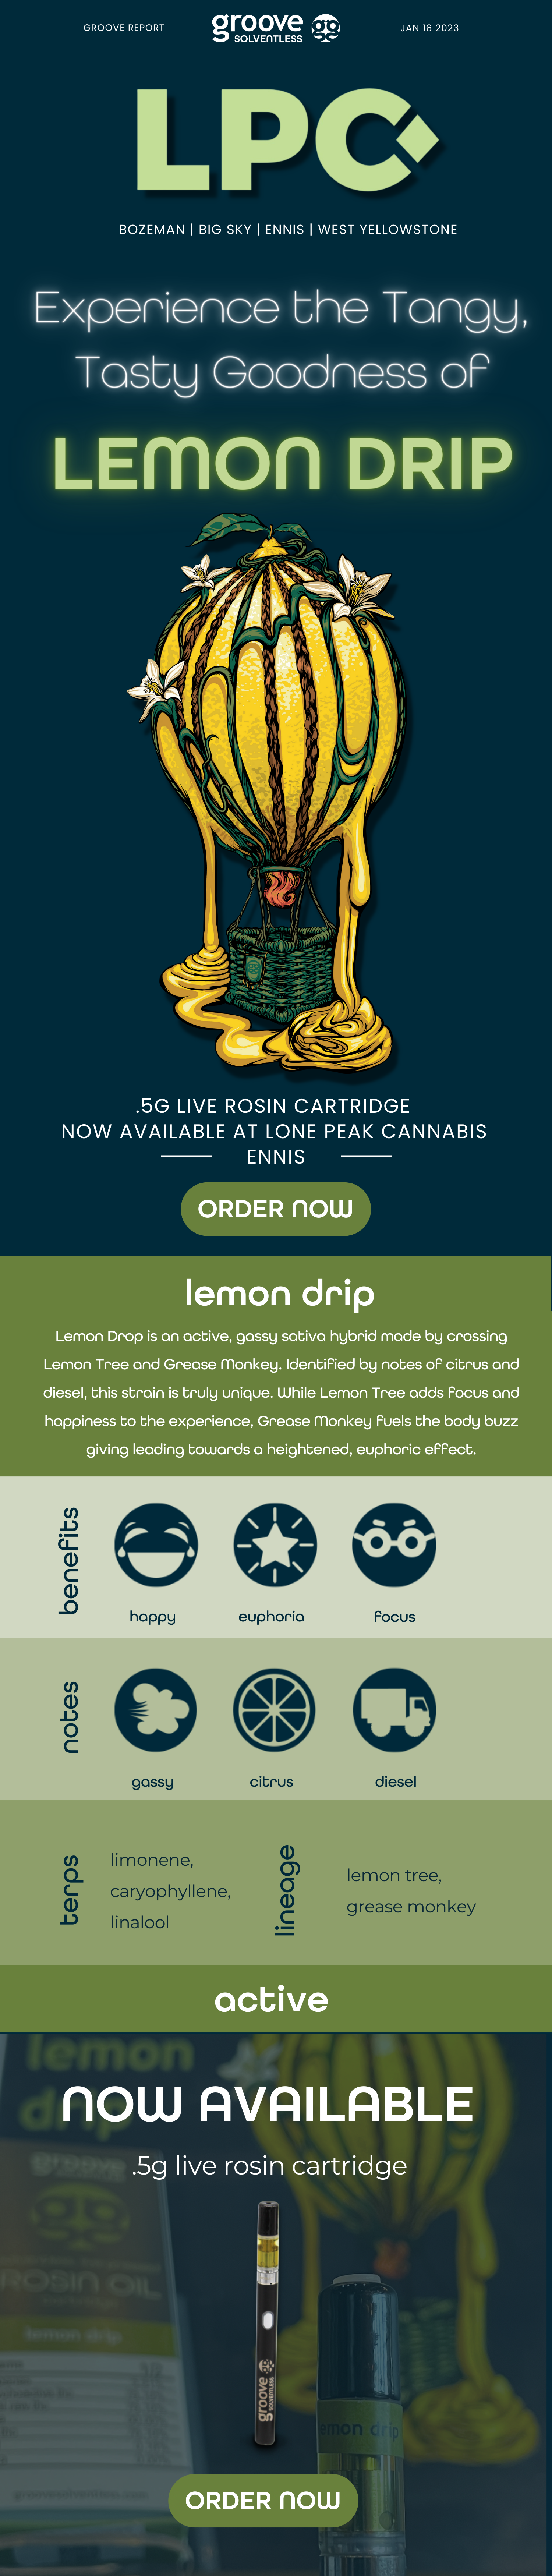 Lemon Drip Available at Lone Peak Ennis